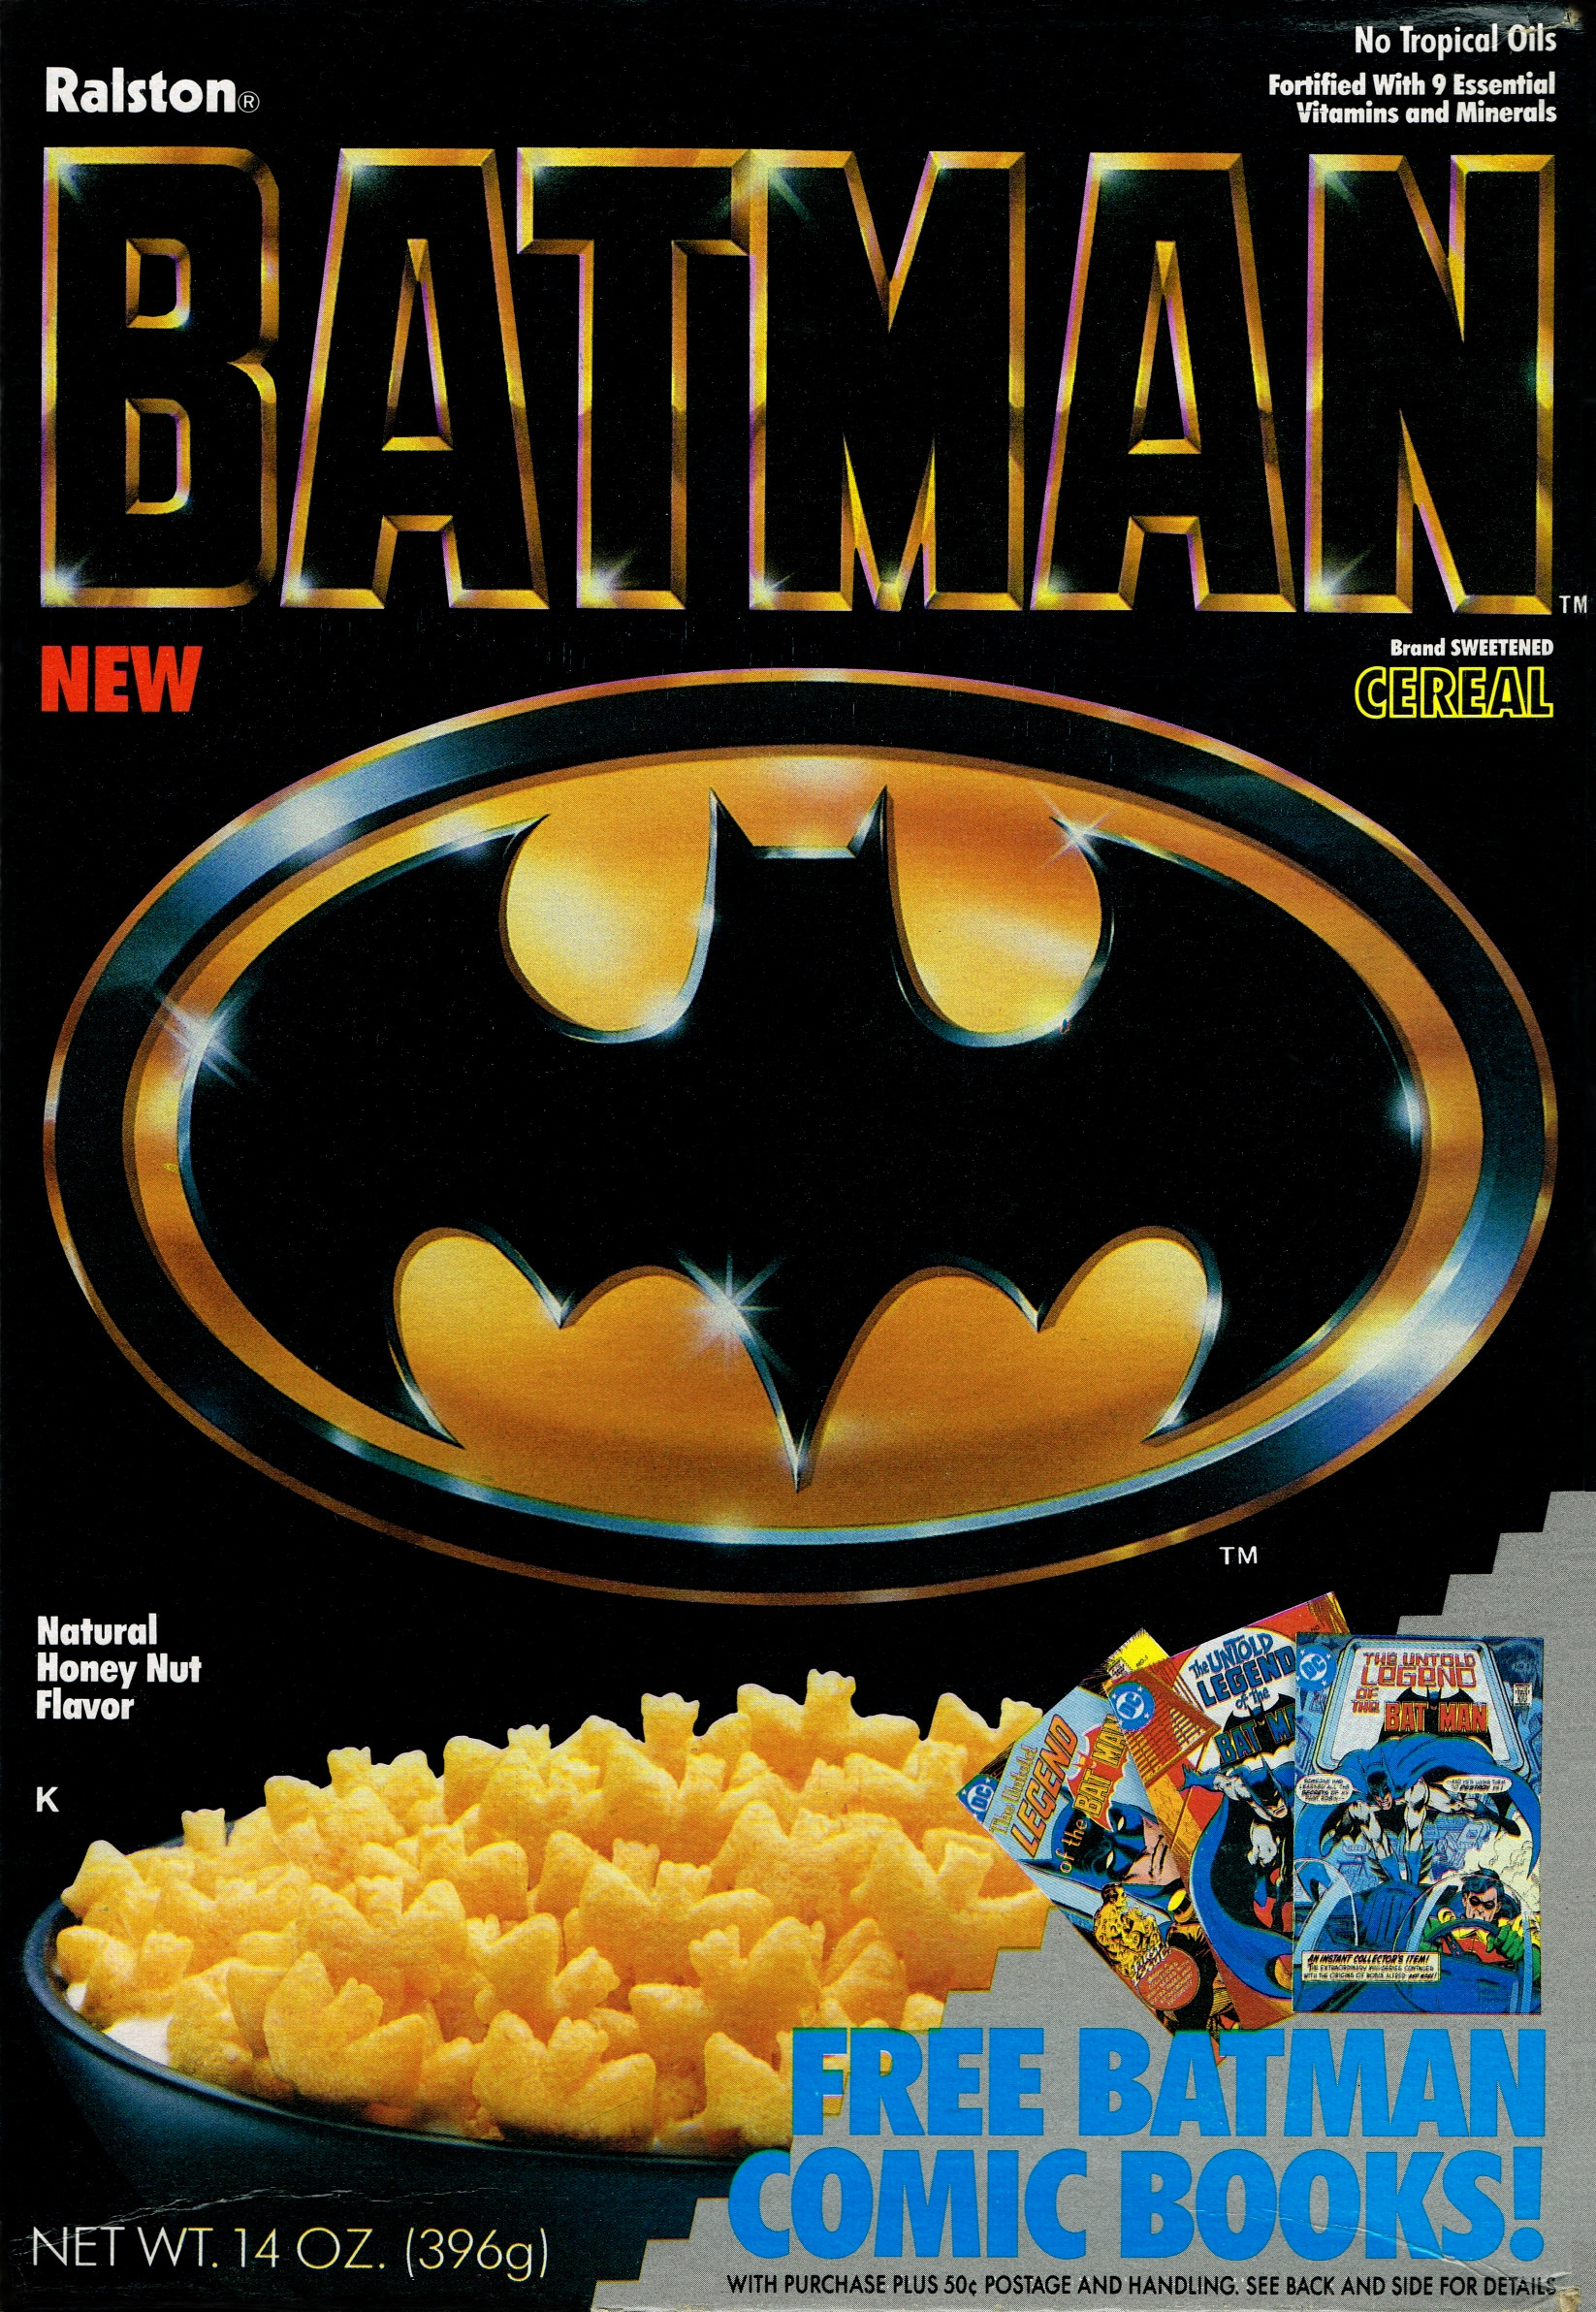 Introducir 38+ imagen cereal batman